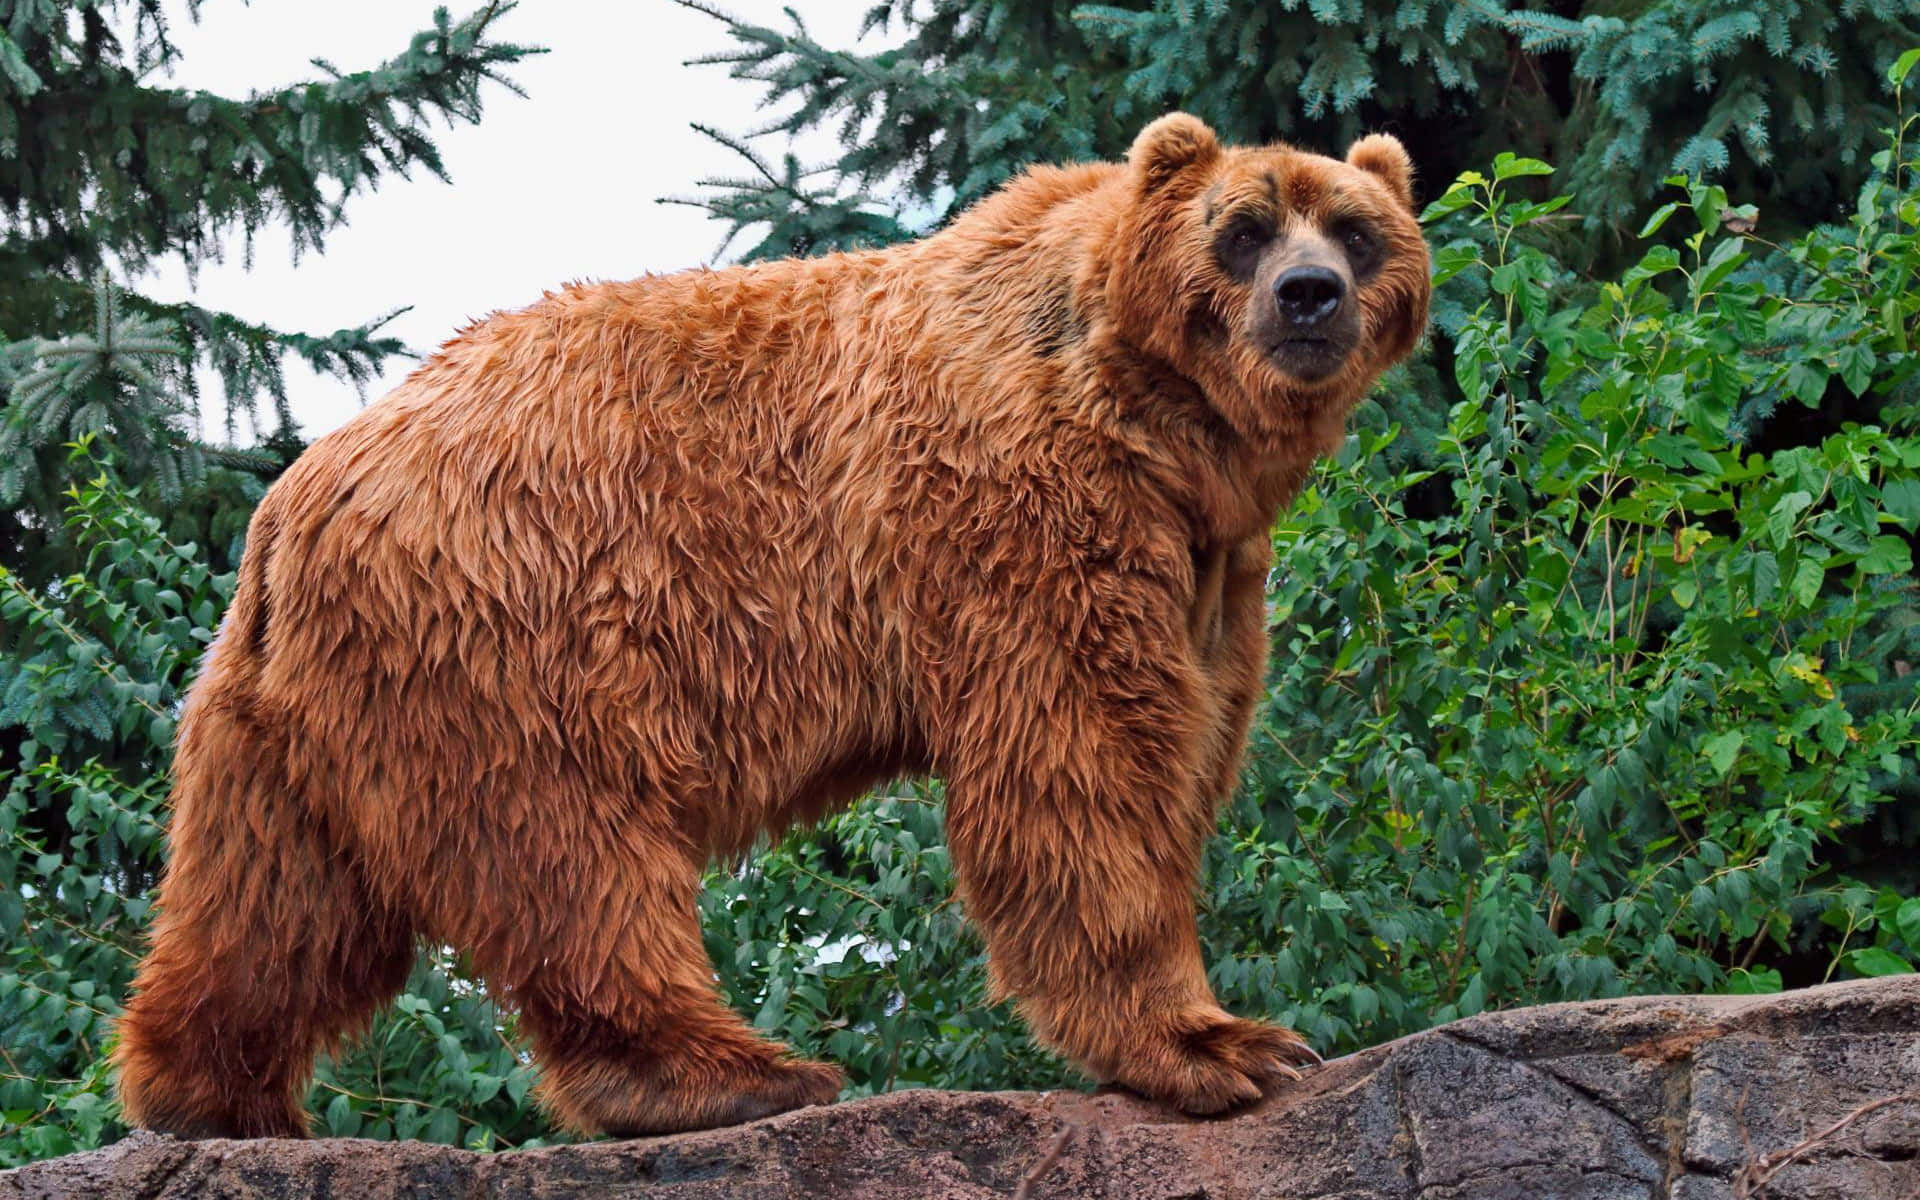 A Kodiak Bear resting in a forest